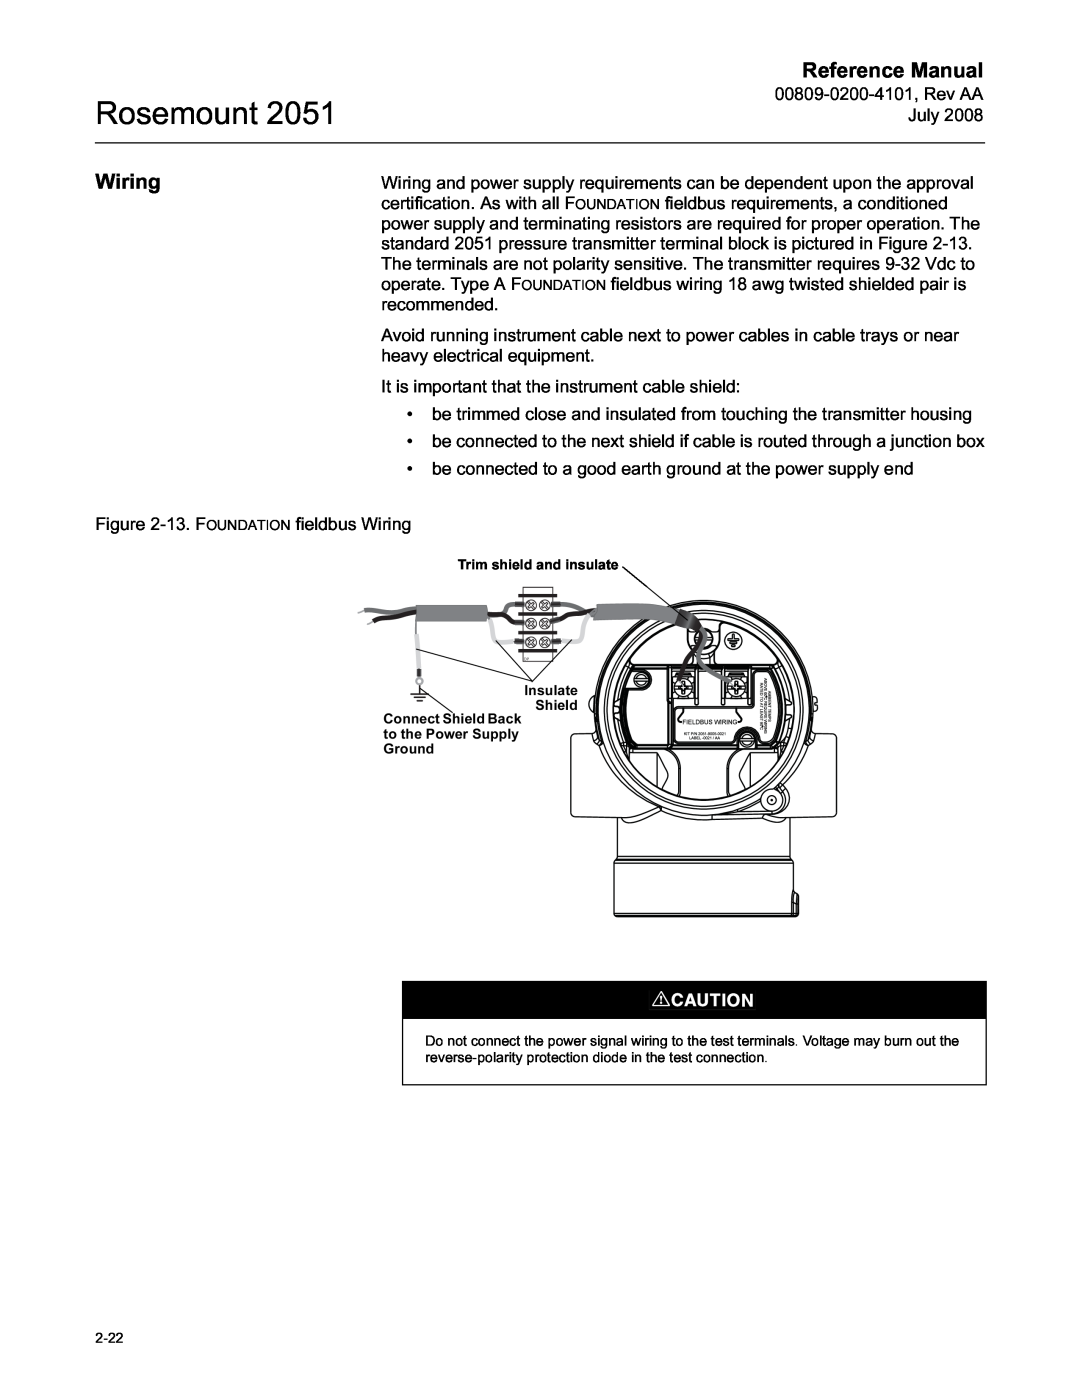 Emerson Process Management 2051 manual Wiring, Rosemount, Reference Manual 